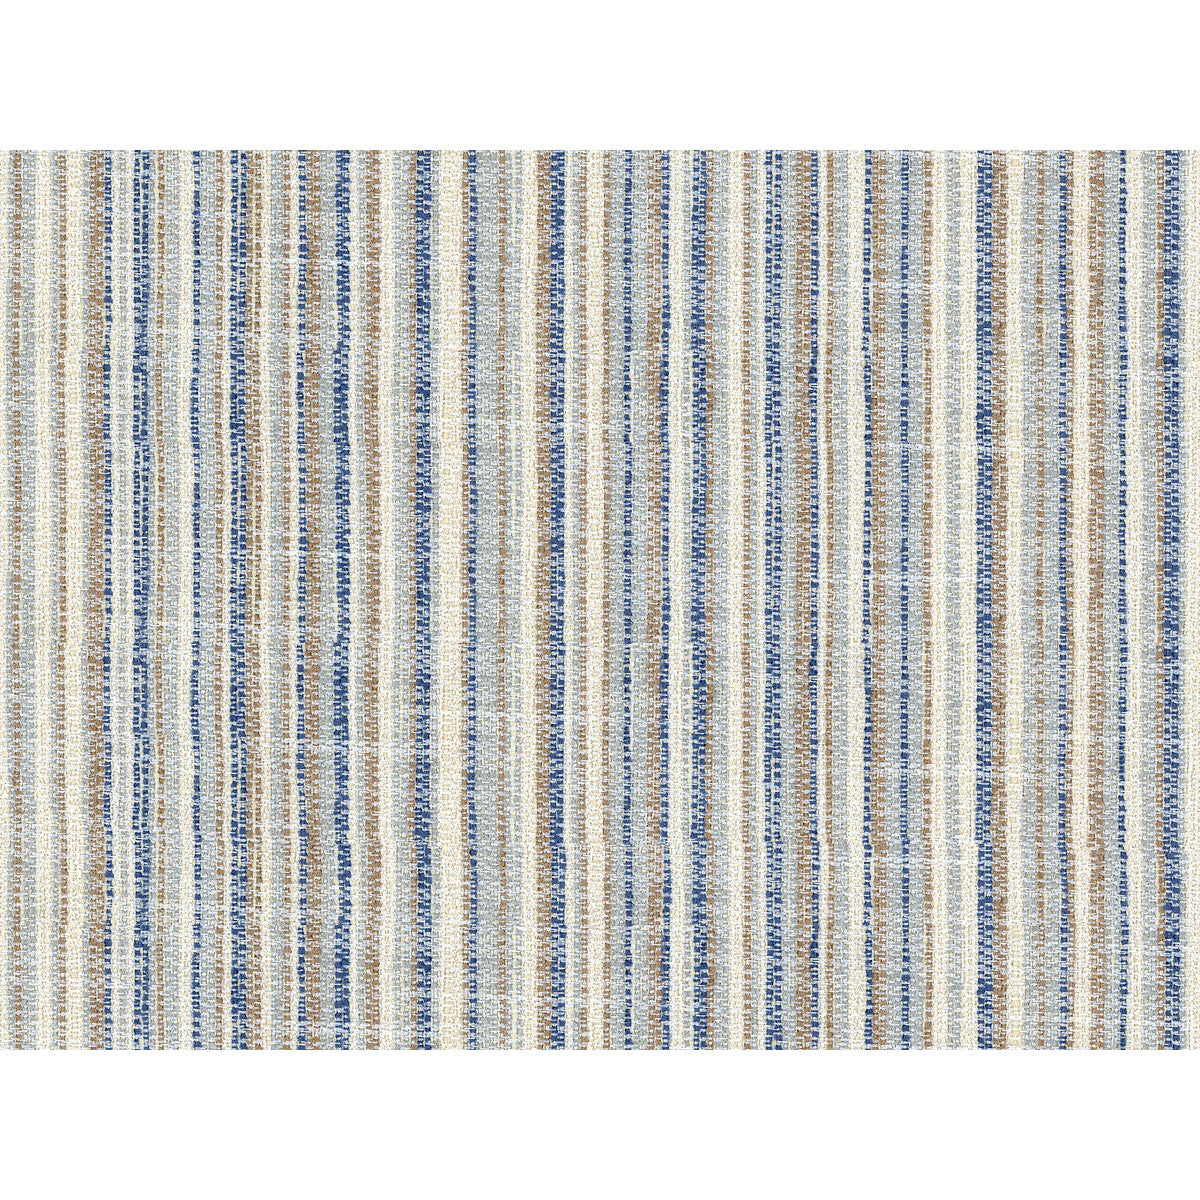 Kravet Smart fabric in 34309-516 color - pattern 34309.516.0 - by Kravet Smart